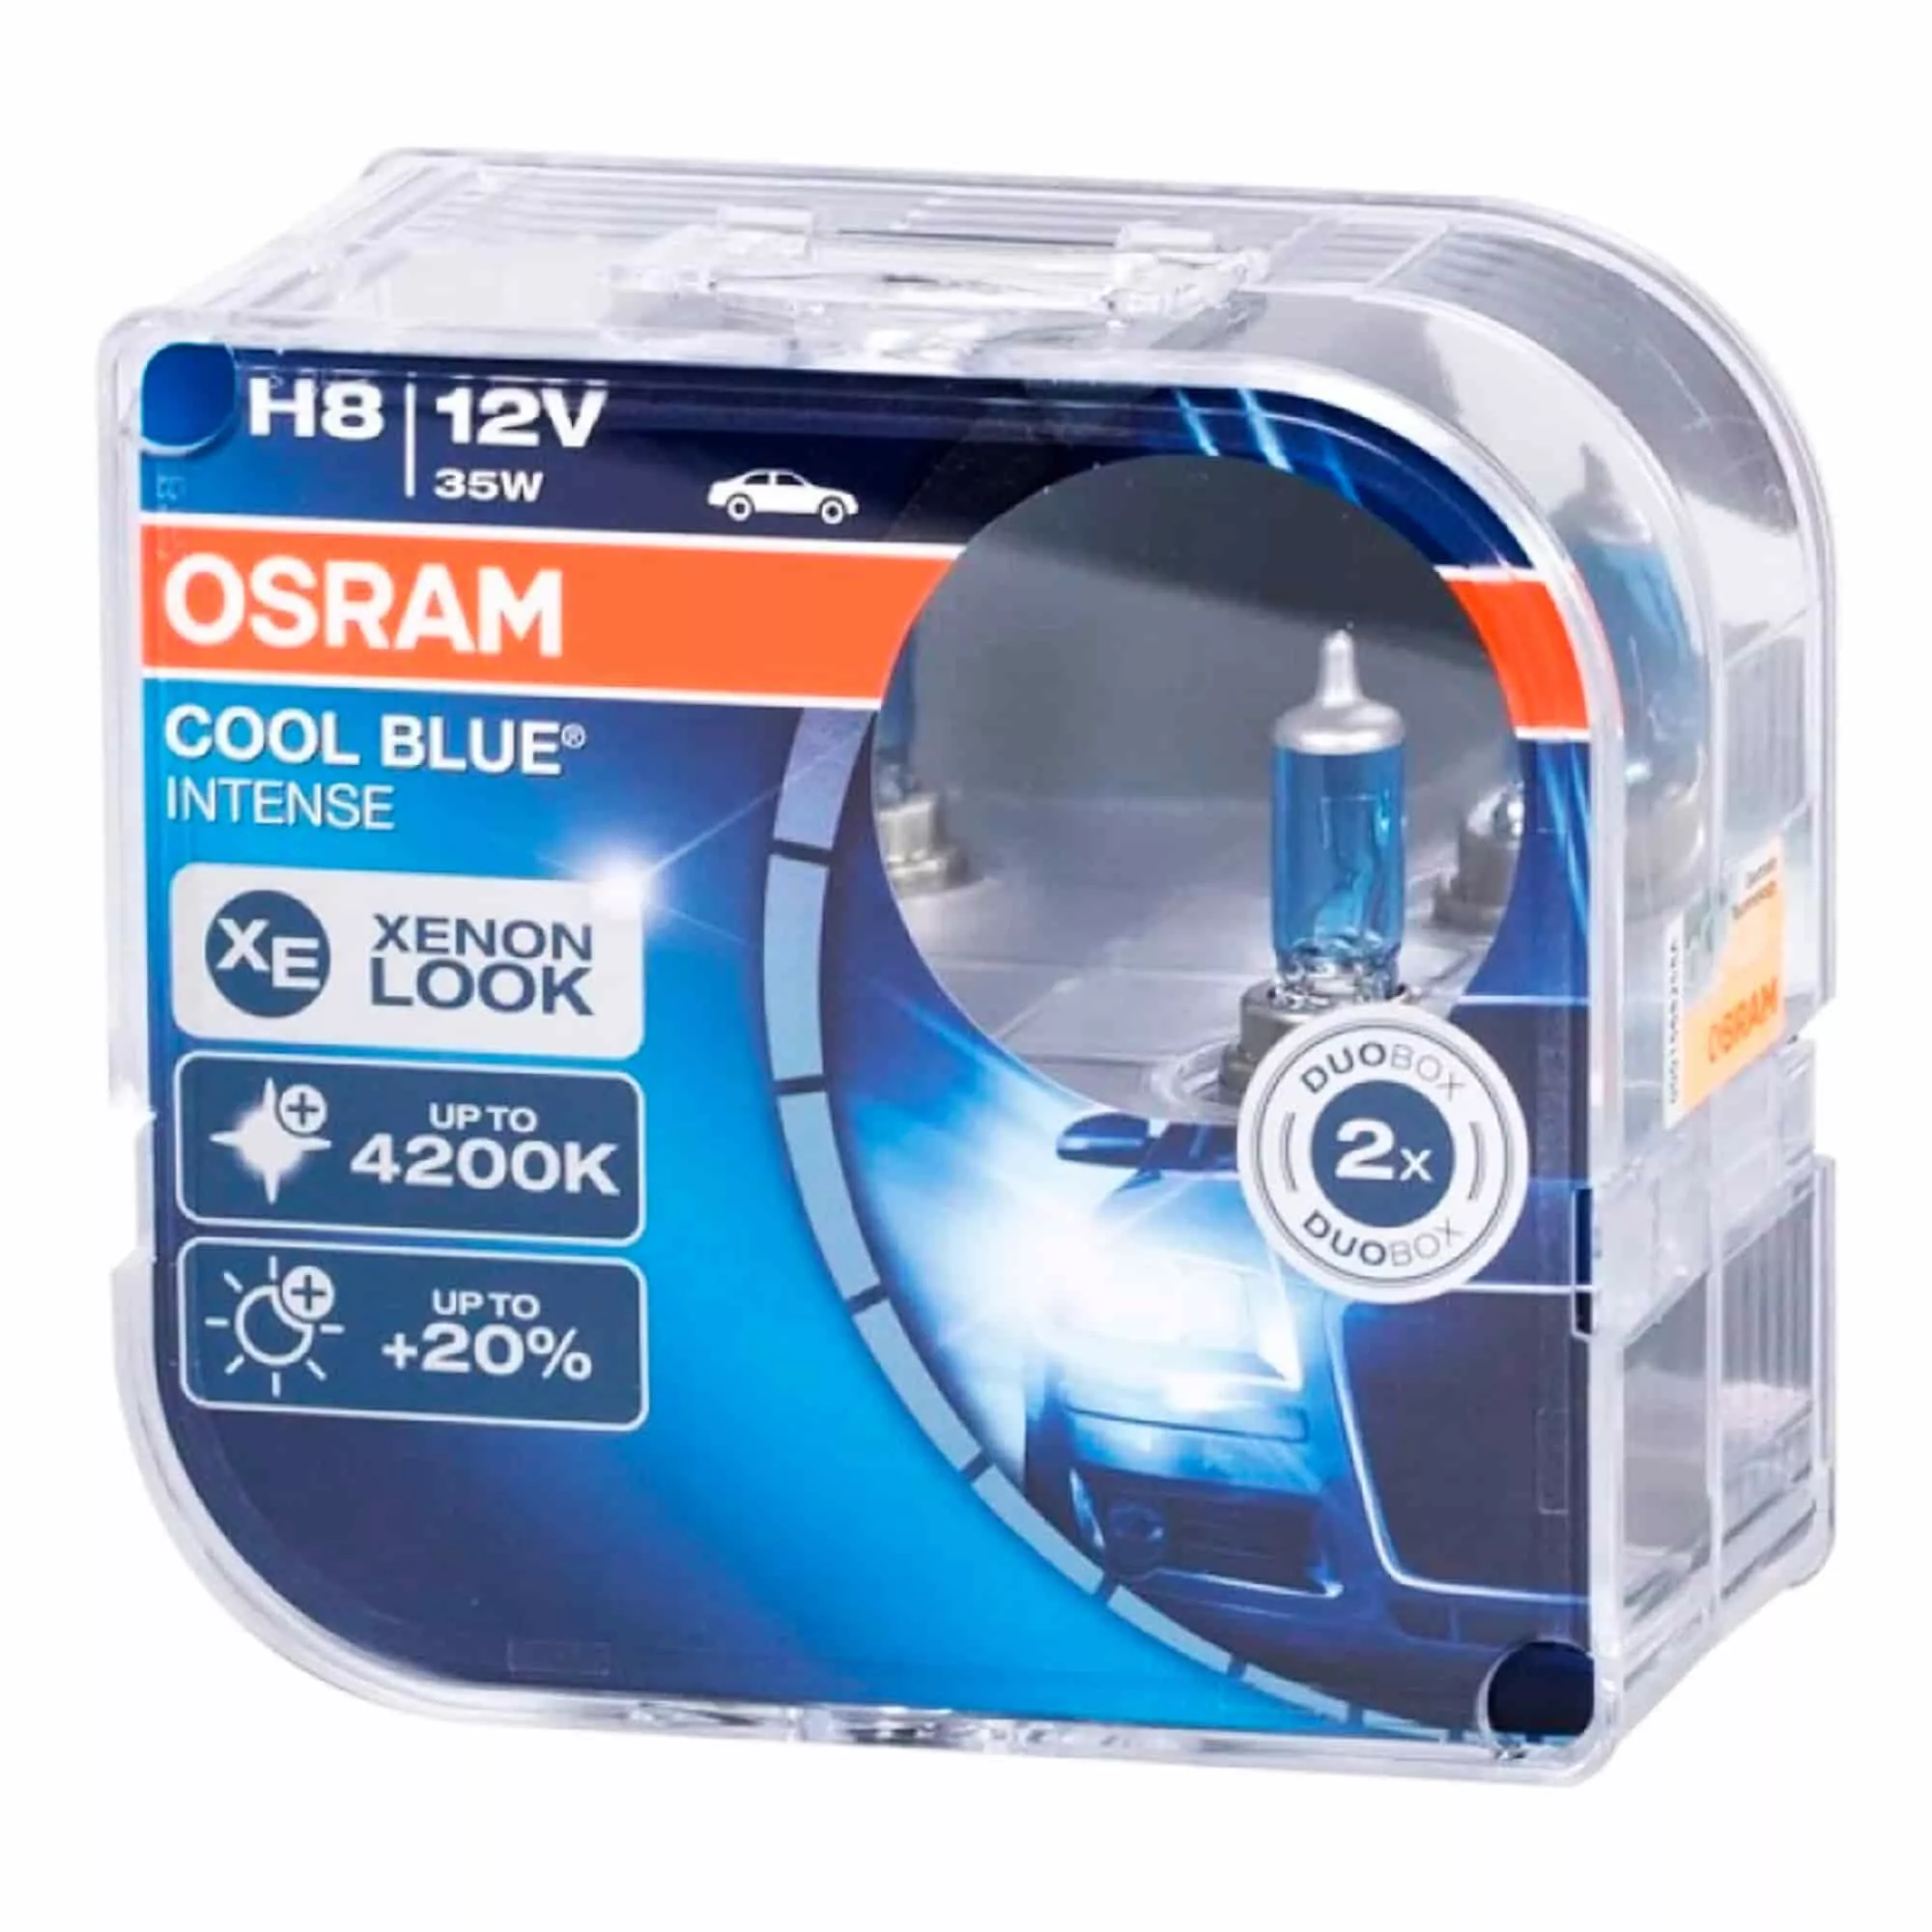 Лампа Osram Cool Blue Intense H8 12V 35W 64212CBI-HCB